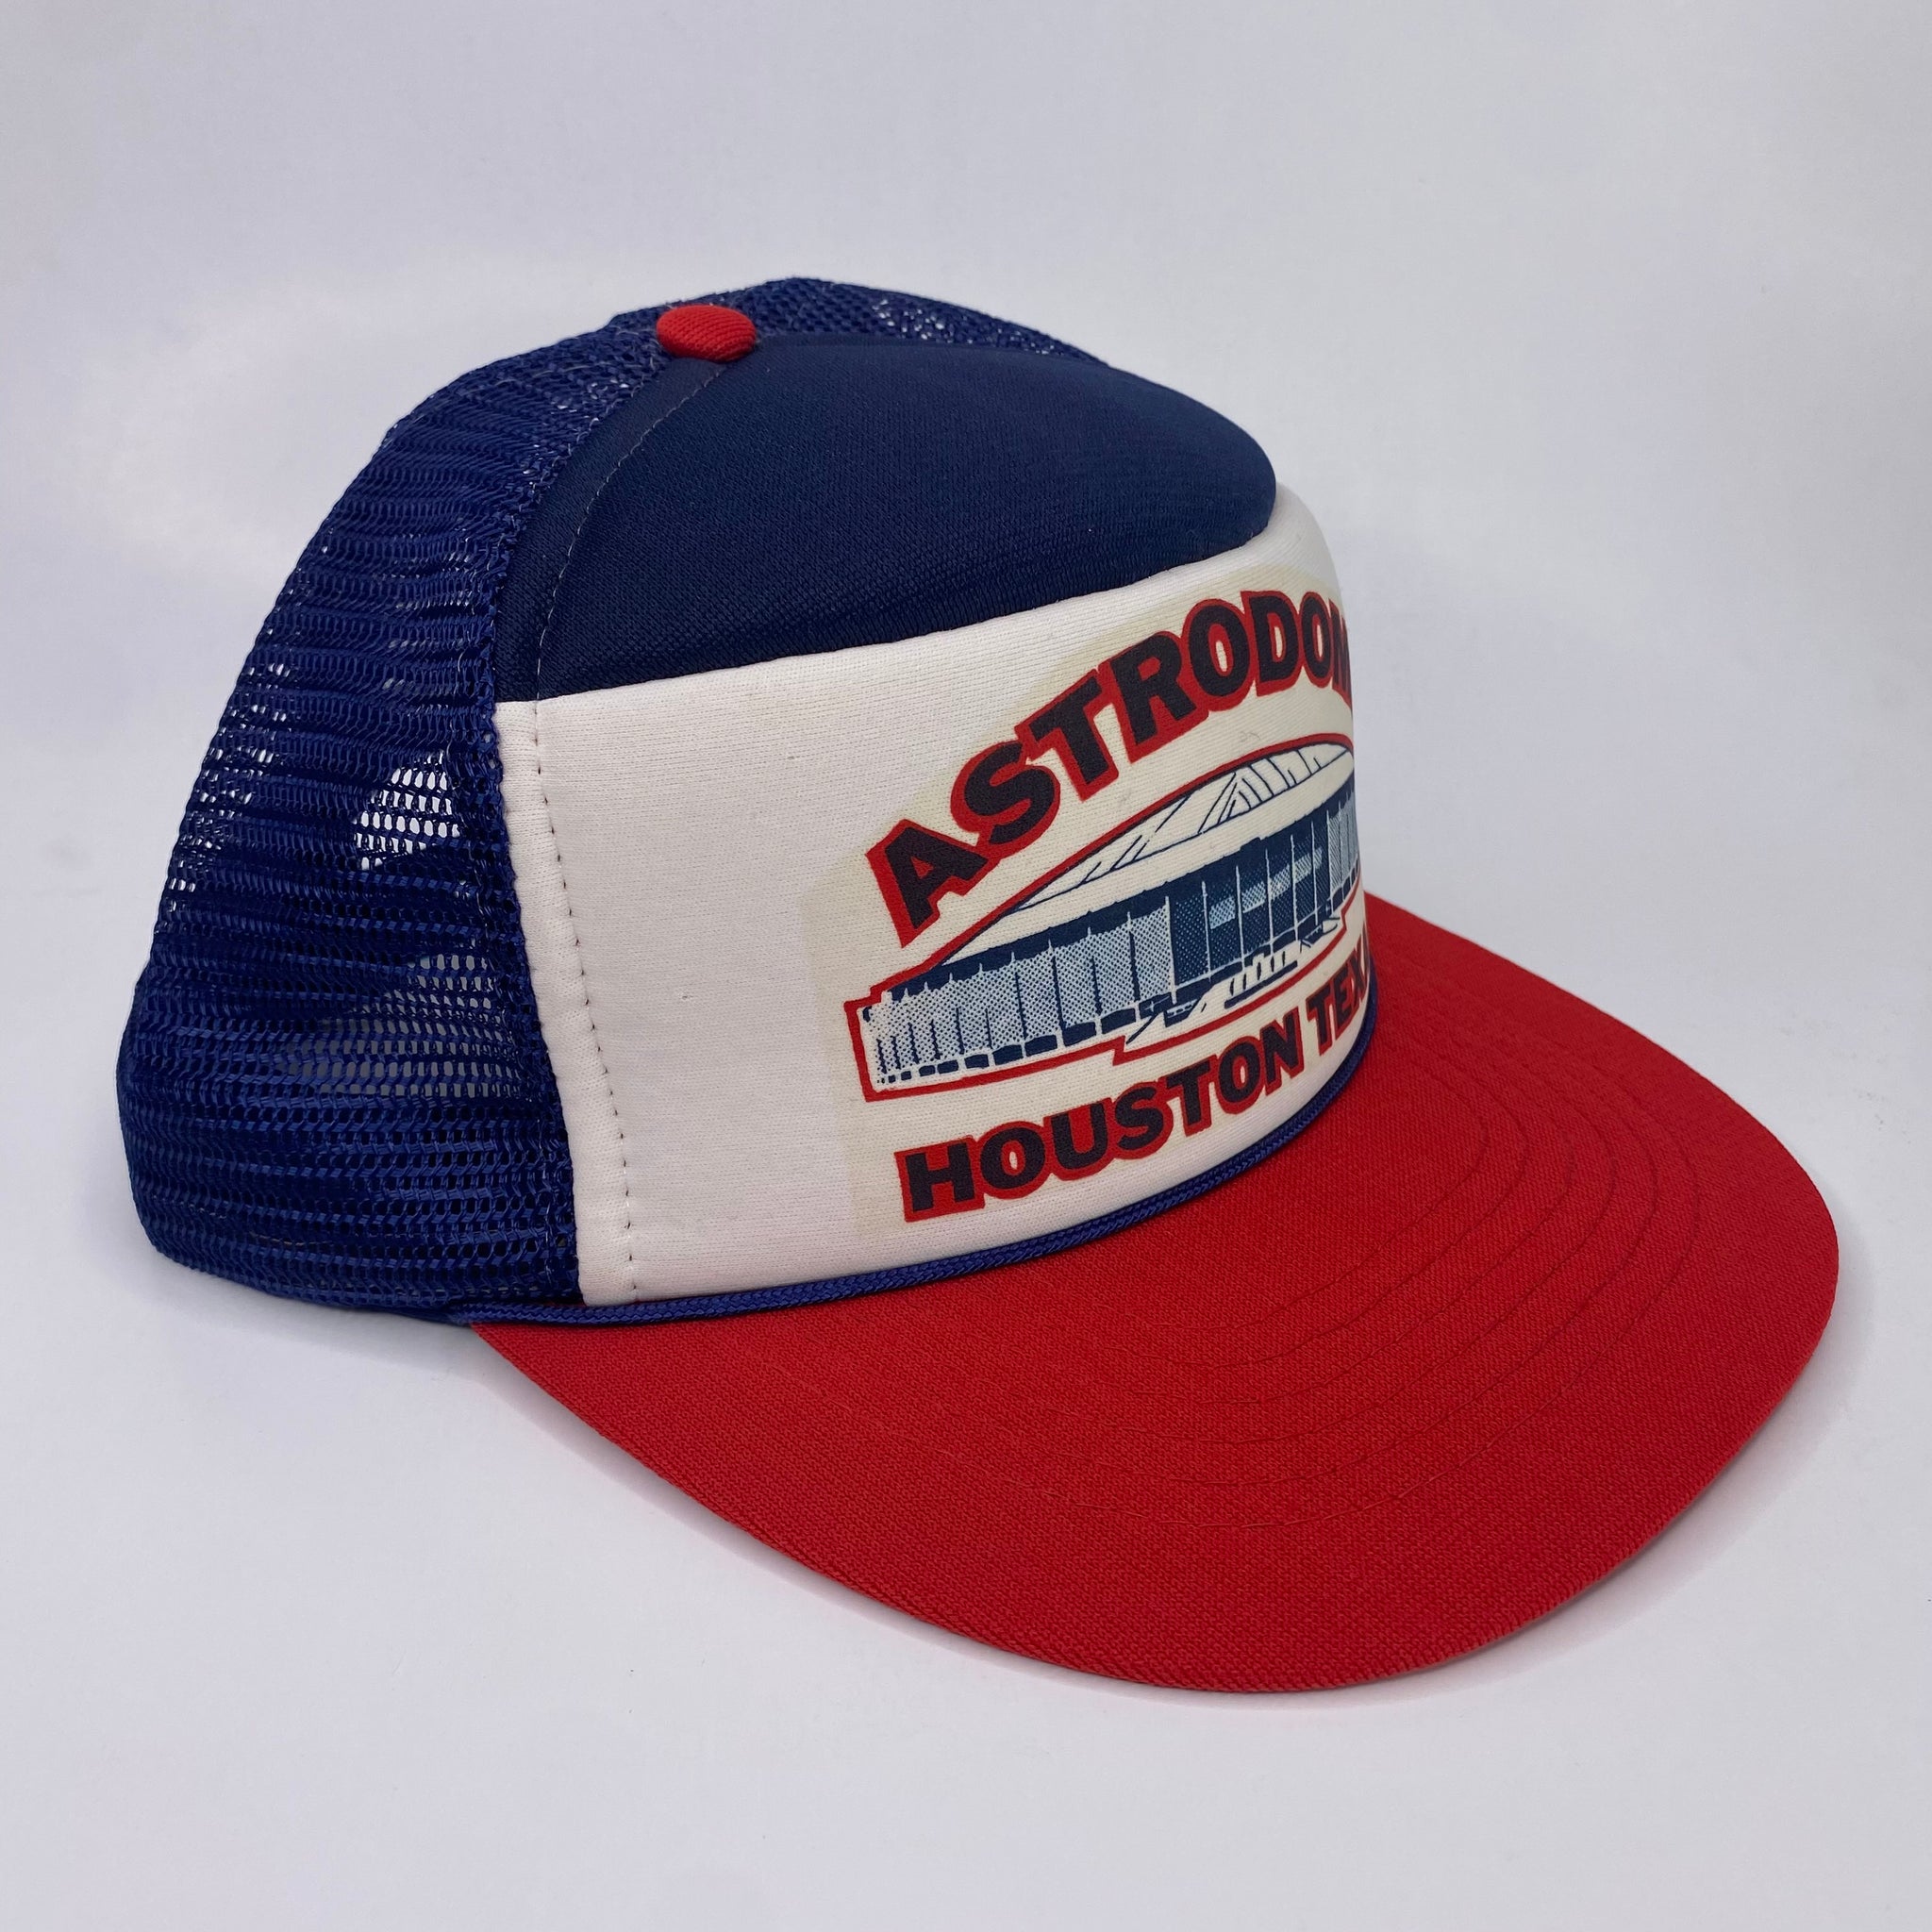 astros 90s hat